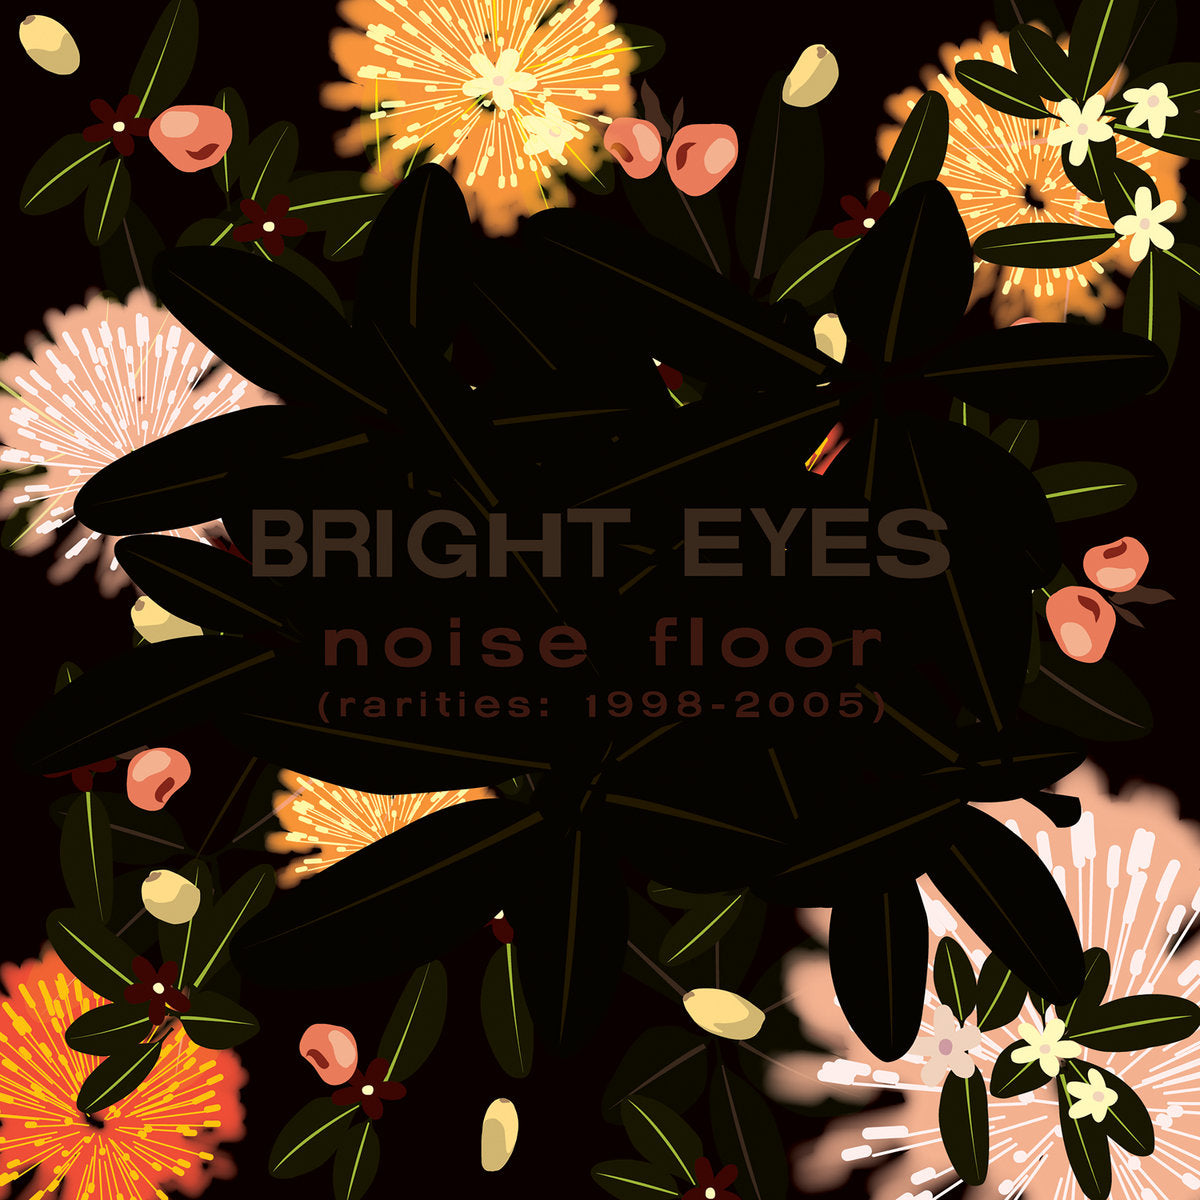 Bright Eyes "Noise Floor (rarities: 1998-2005)" 12" Vinyl